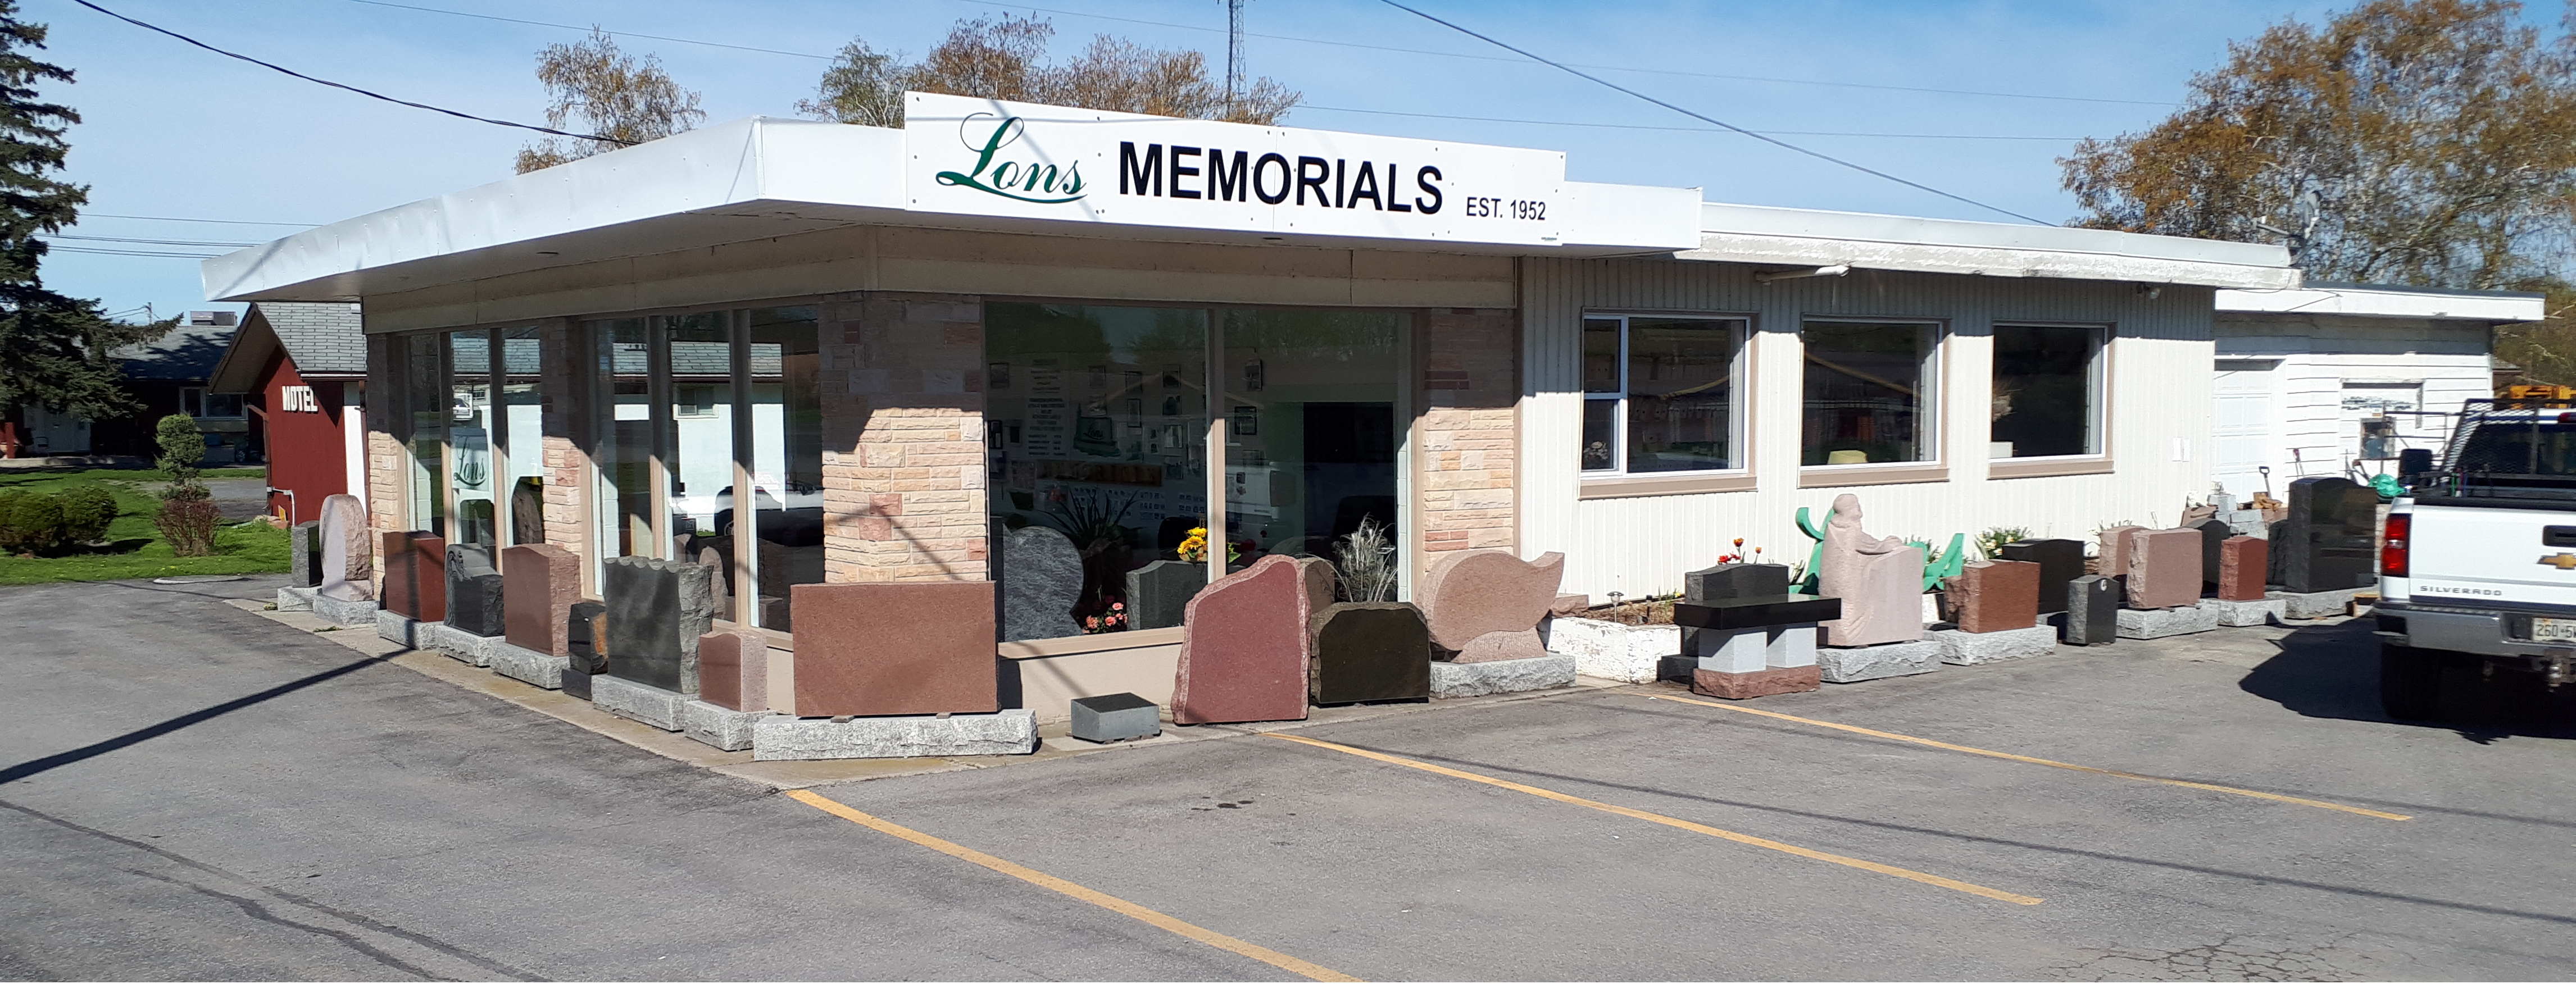 Lons Memorials</div>
			<a>		
			<a class=